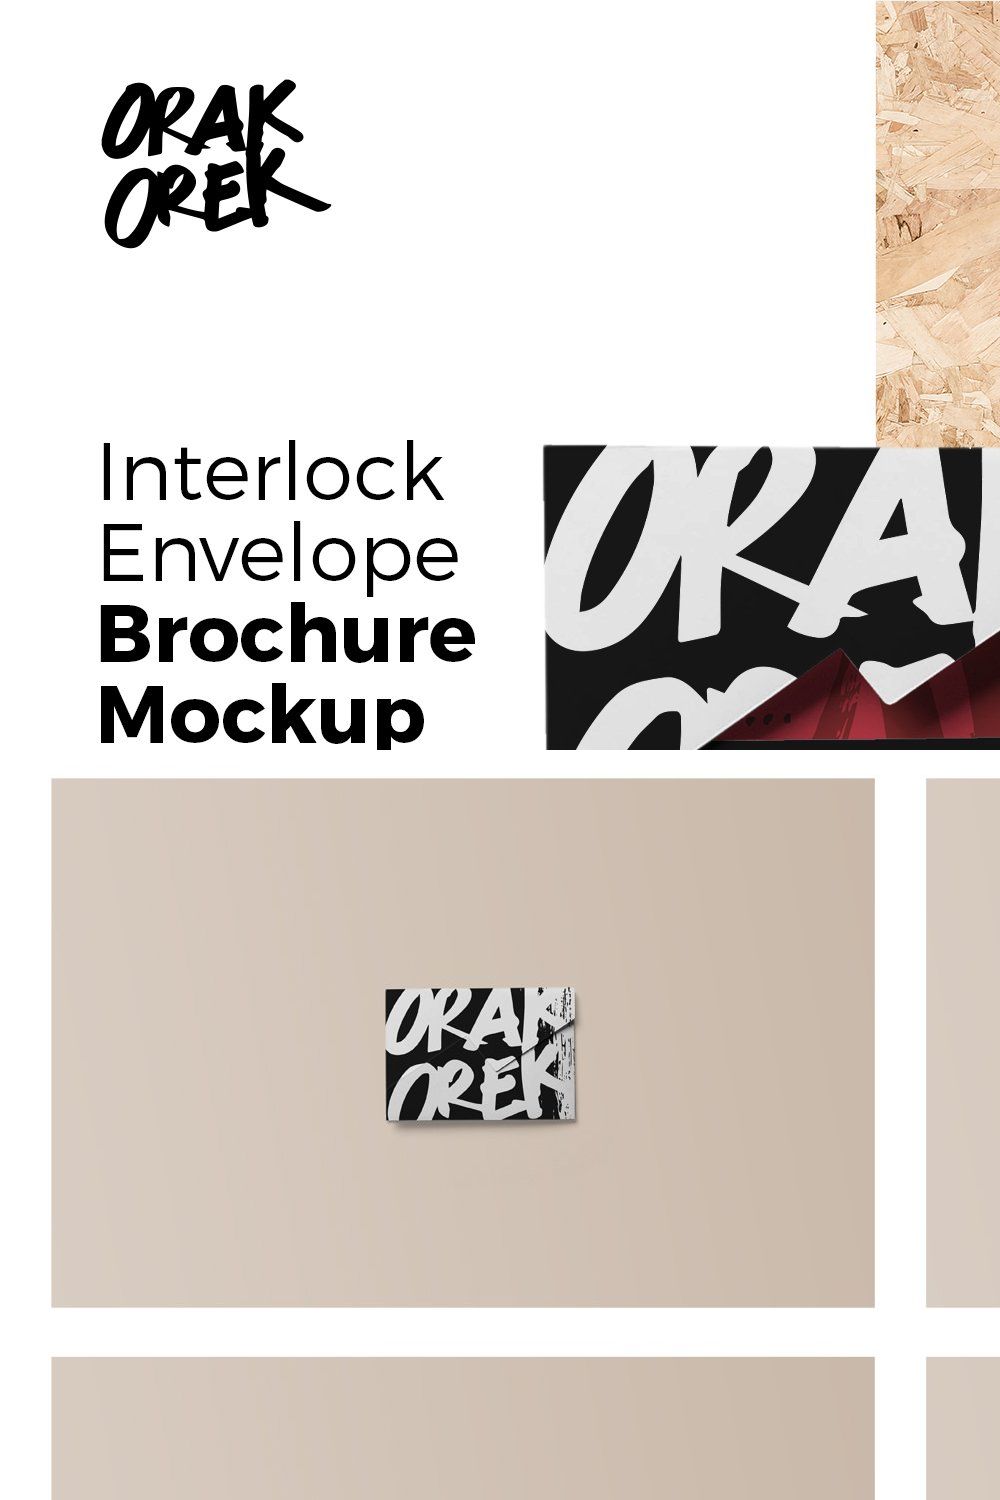 Interlock Envelope Brochure Mockup pinterest preview image.